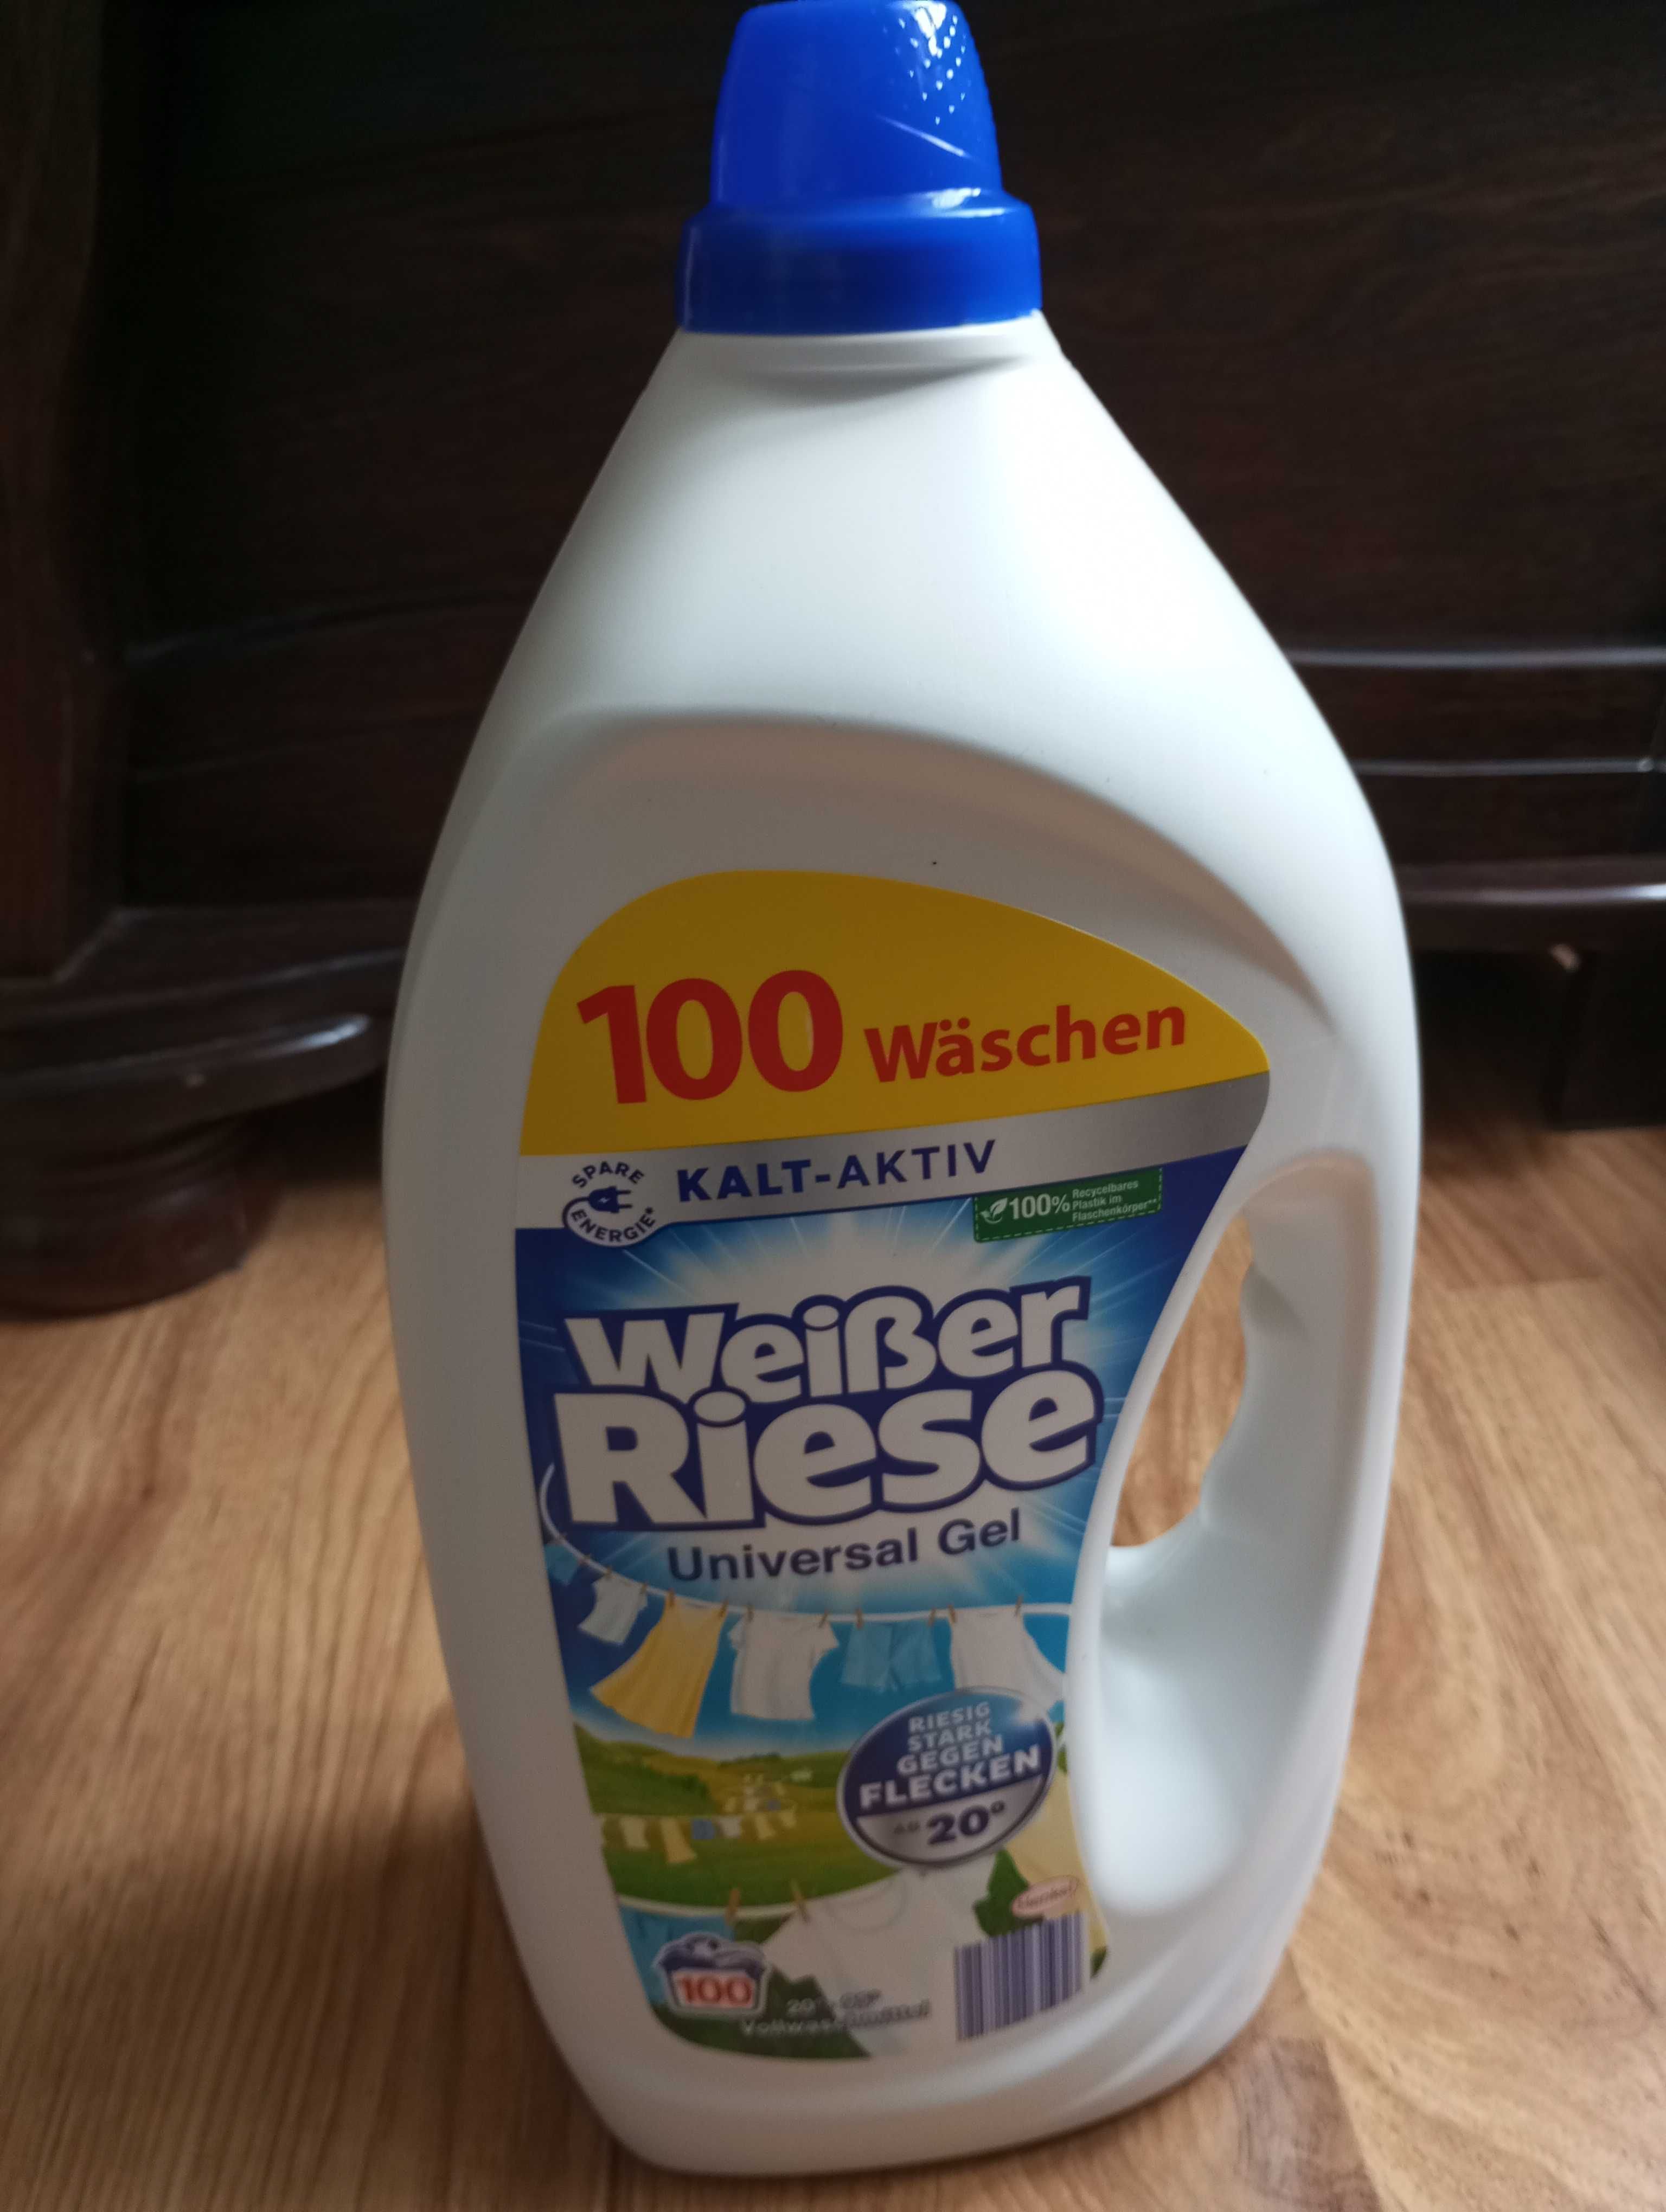 Żel Weiser Riese Universal Gel 100 prań.